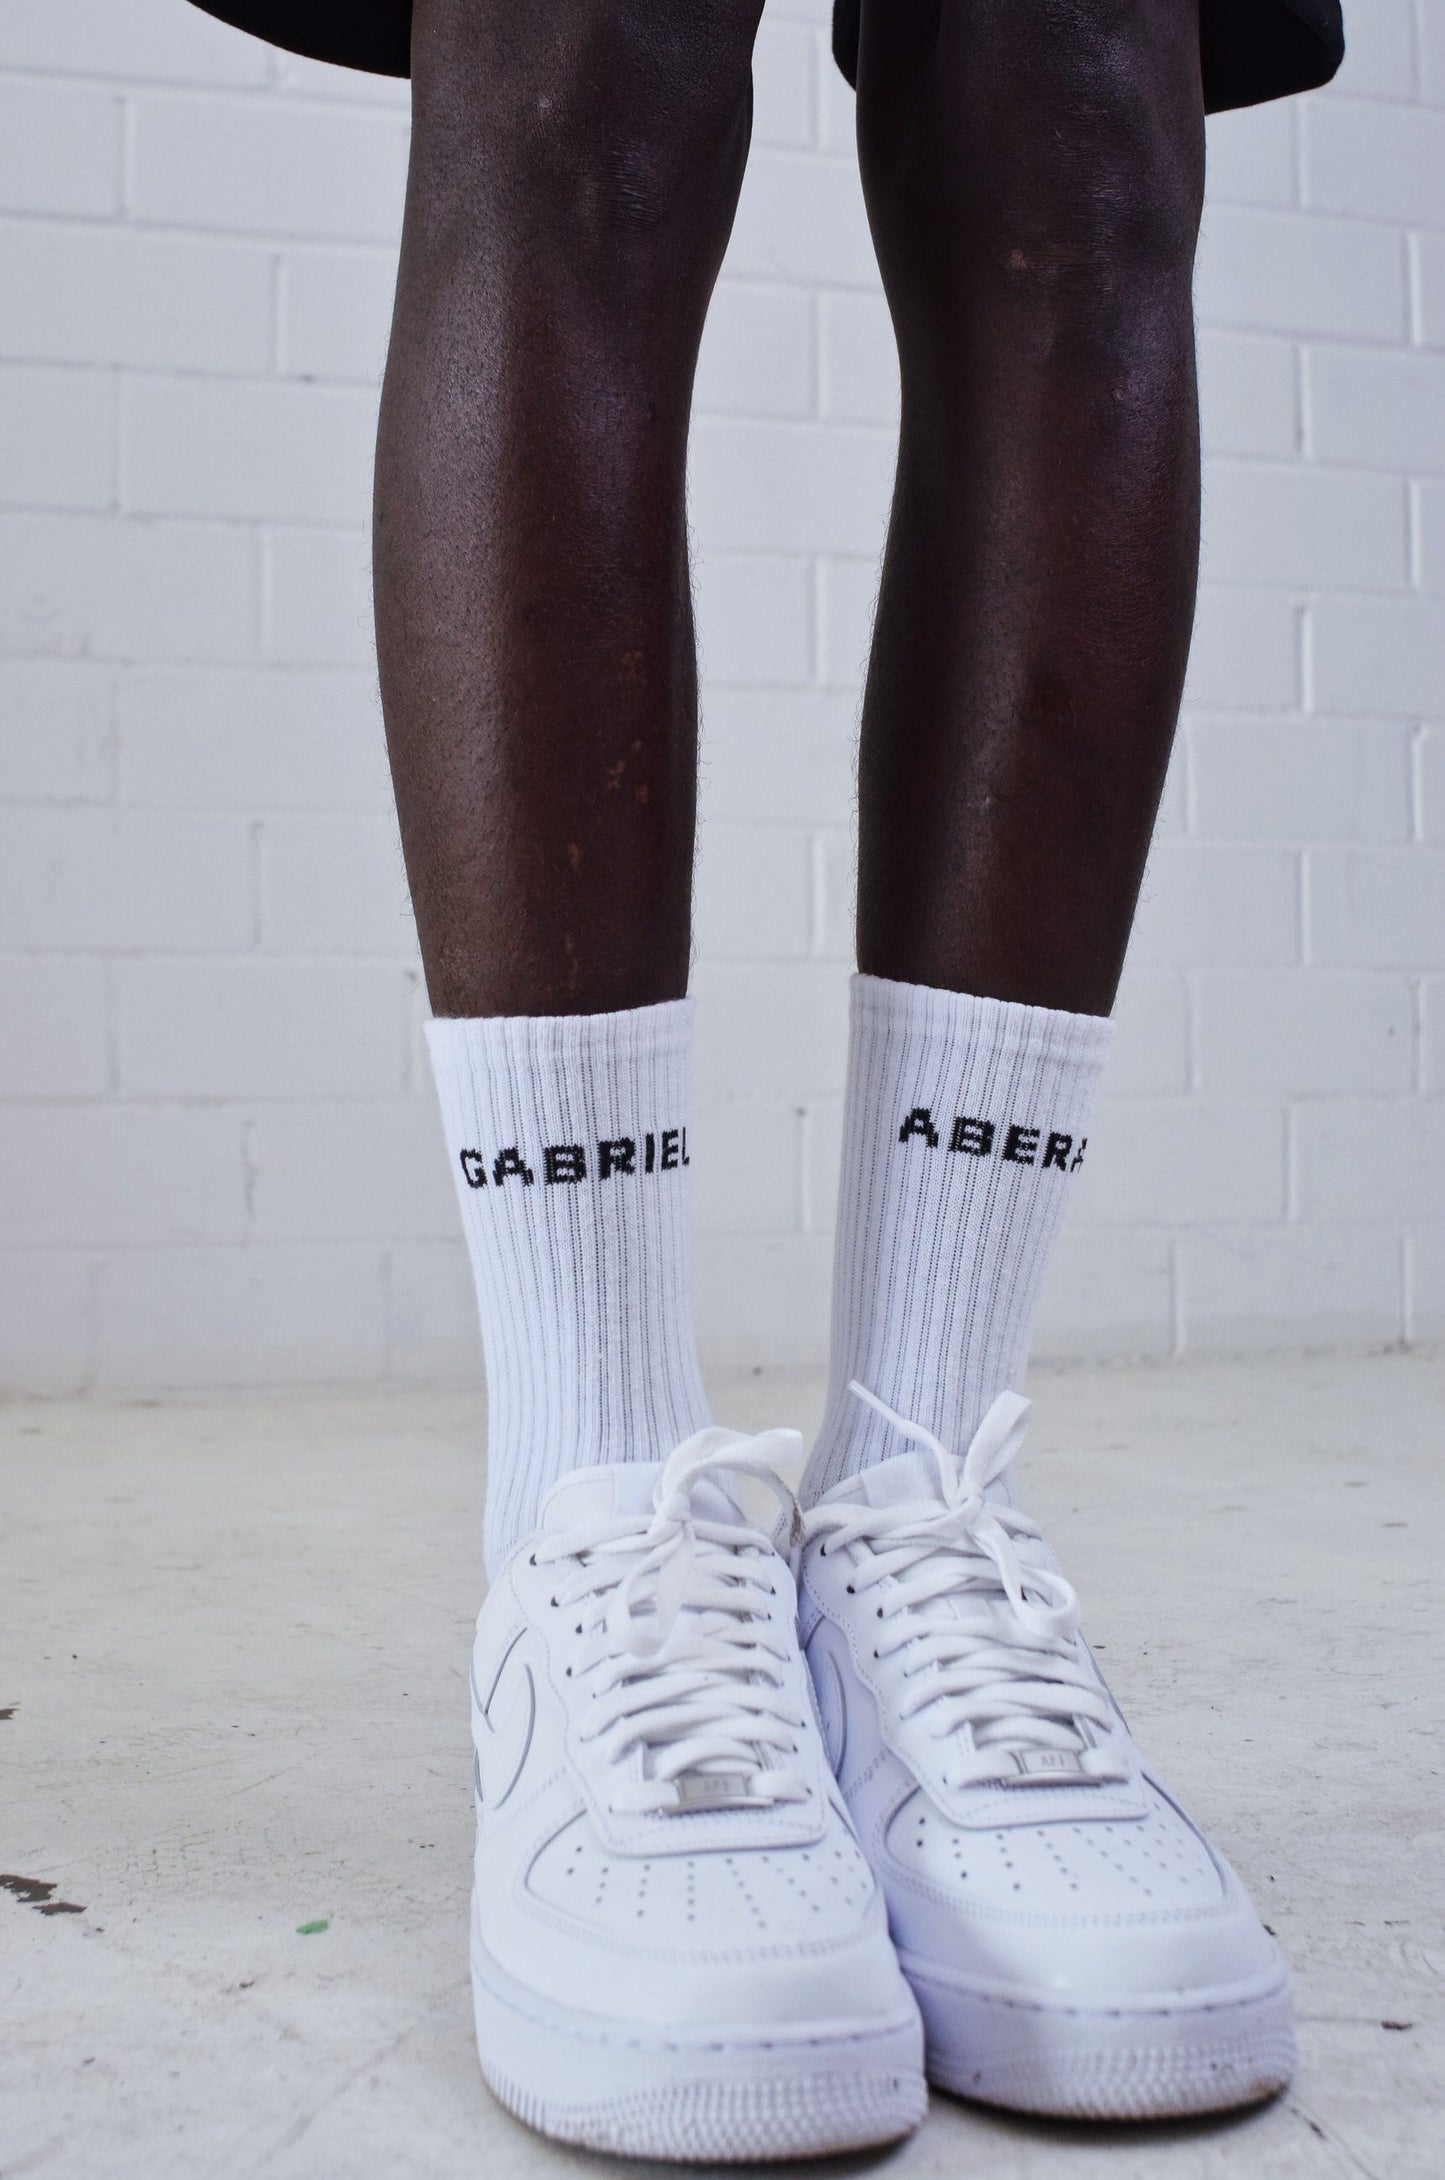 Model wearing White pair of socks with black brand name print